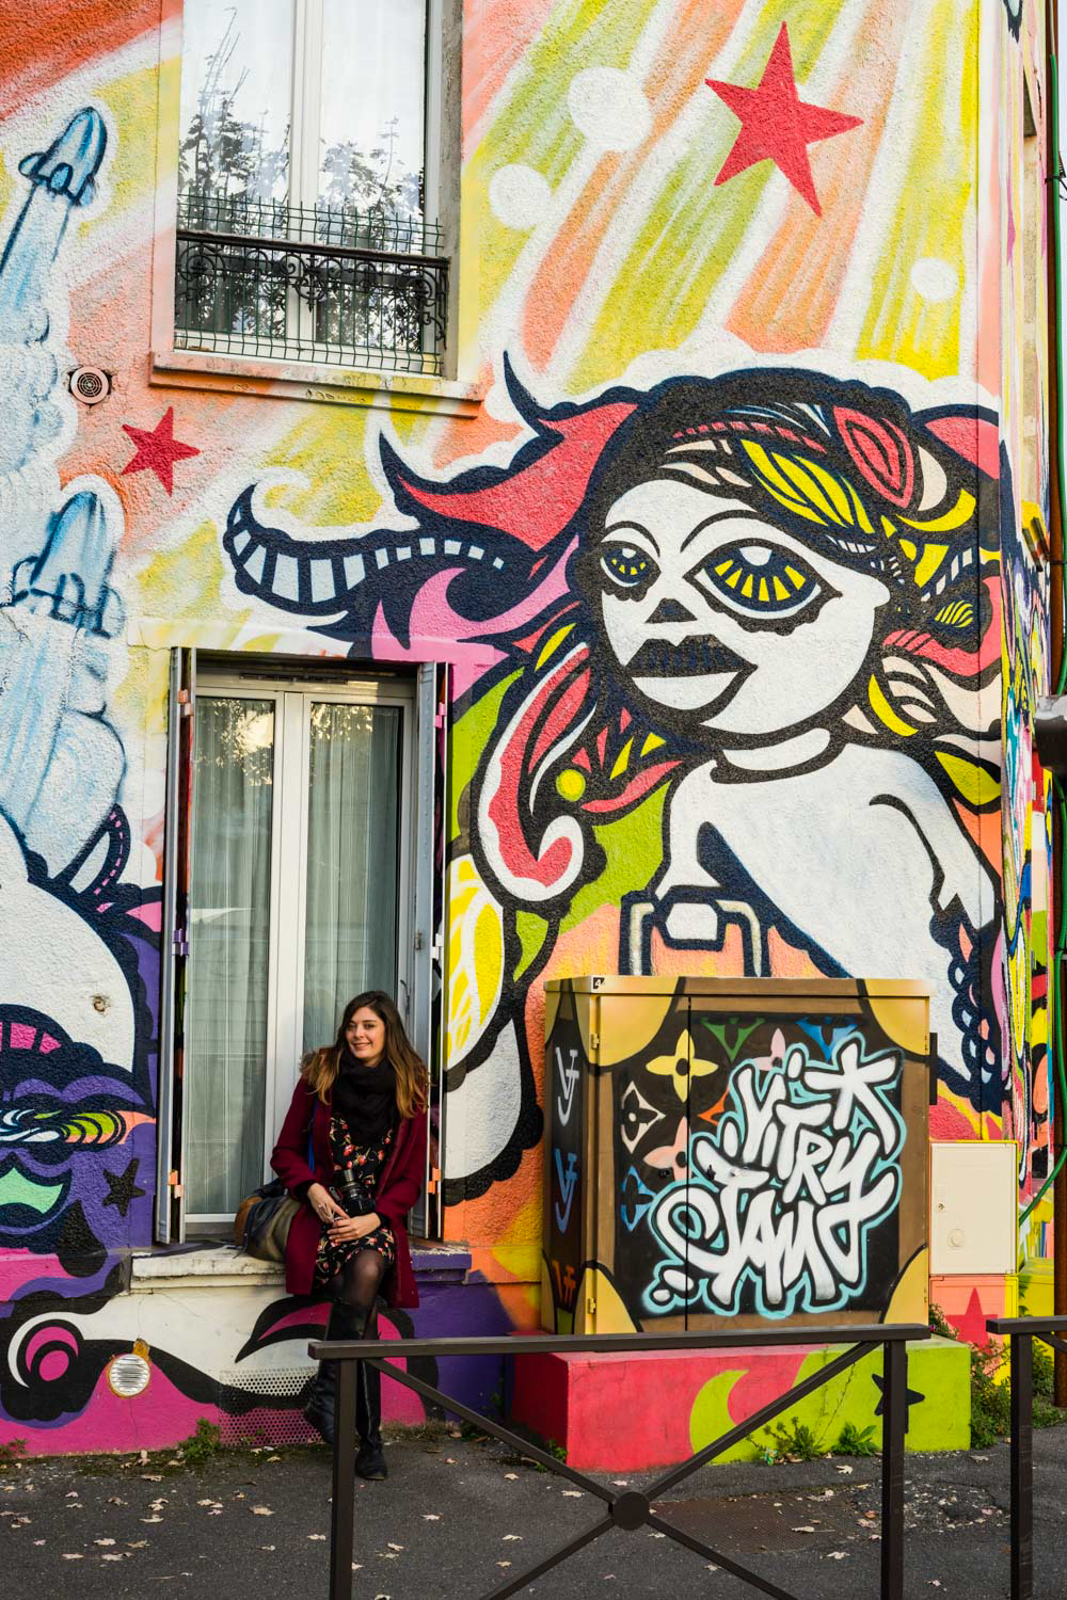 street art vitry-sur-seine, street art vitry, street art val-de-marne, street art banlieue paris, art urbain vitry, art urbain vitry-sur-seine, art urbain vitry, le guide du street art à paris, stéphanie lombard, daCruz, artof popof